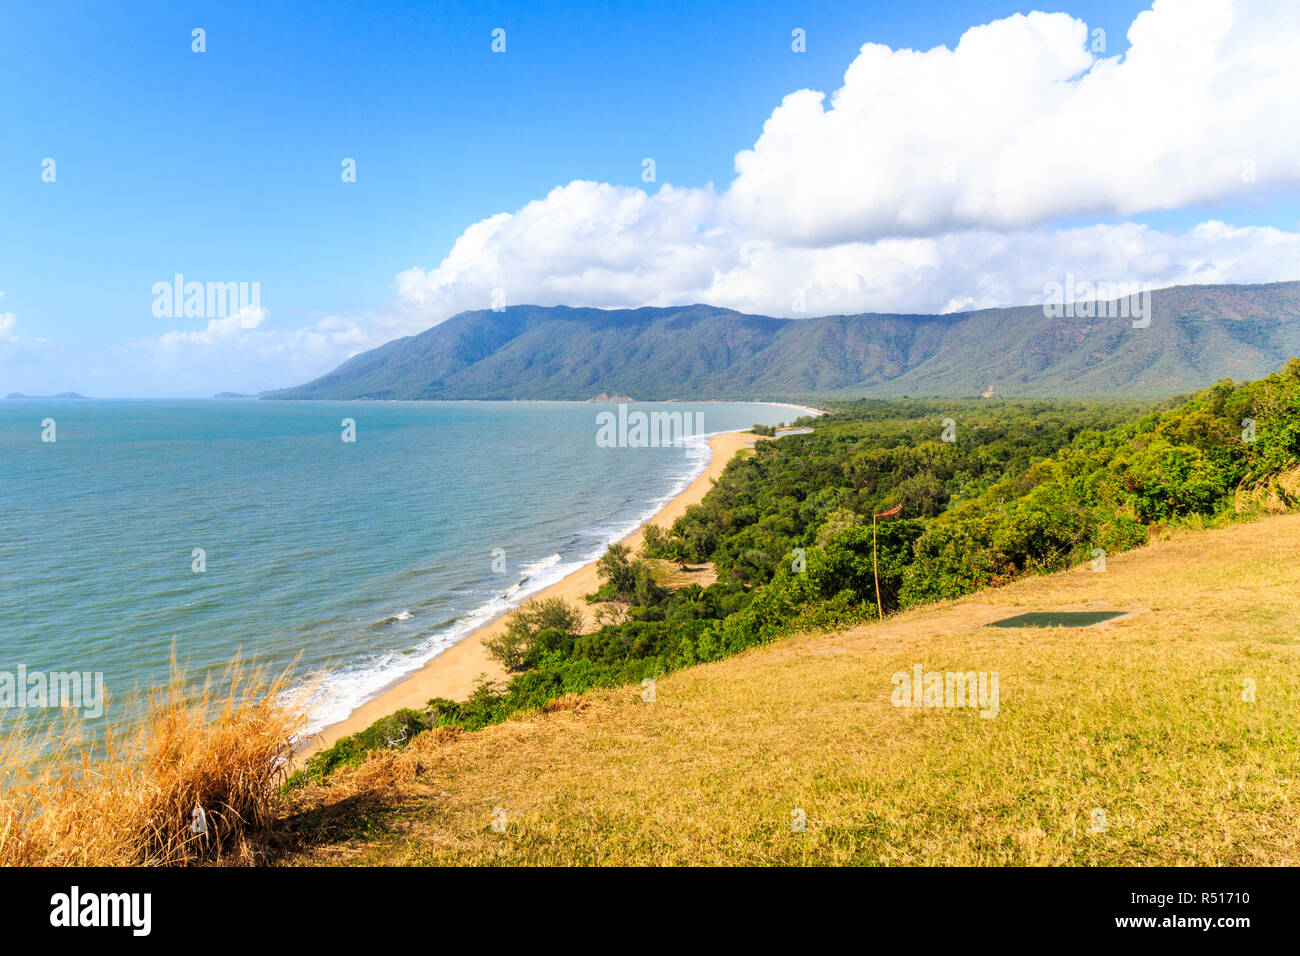 View along the coast, Port Douglas, Queensland, Australia Stock Photo